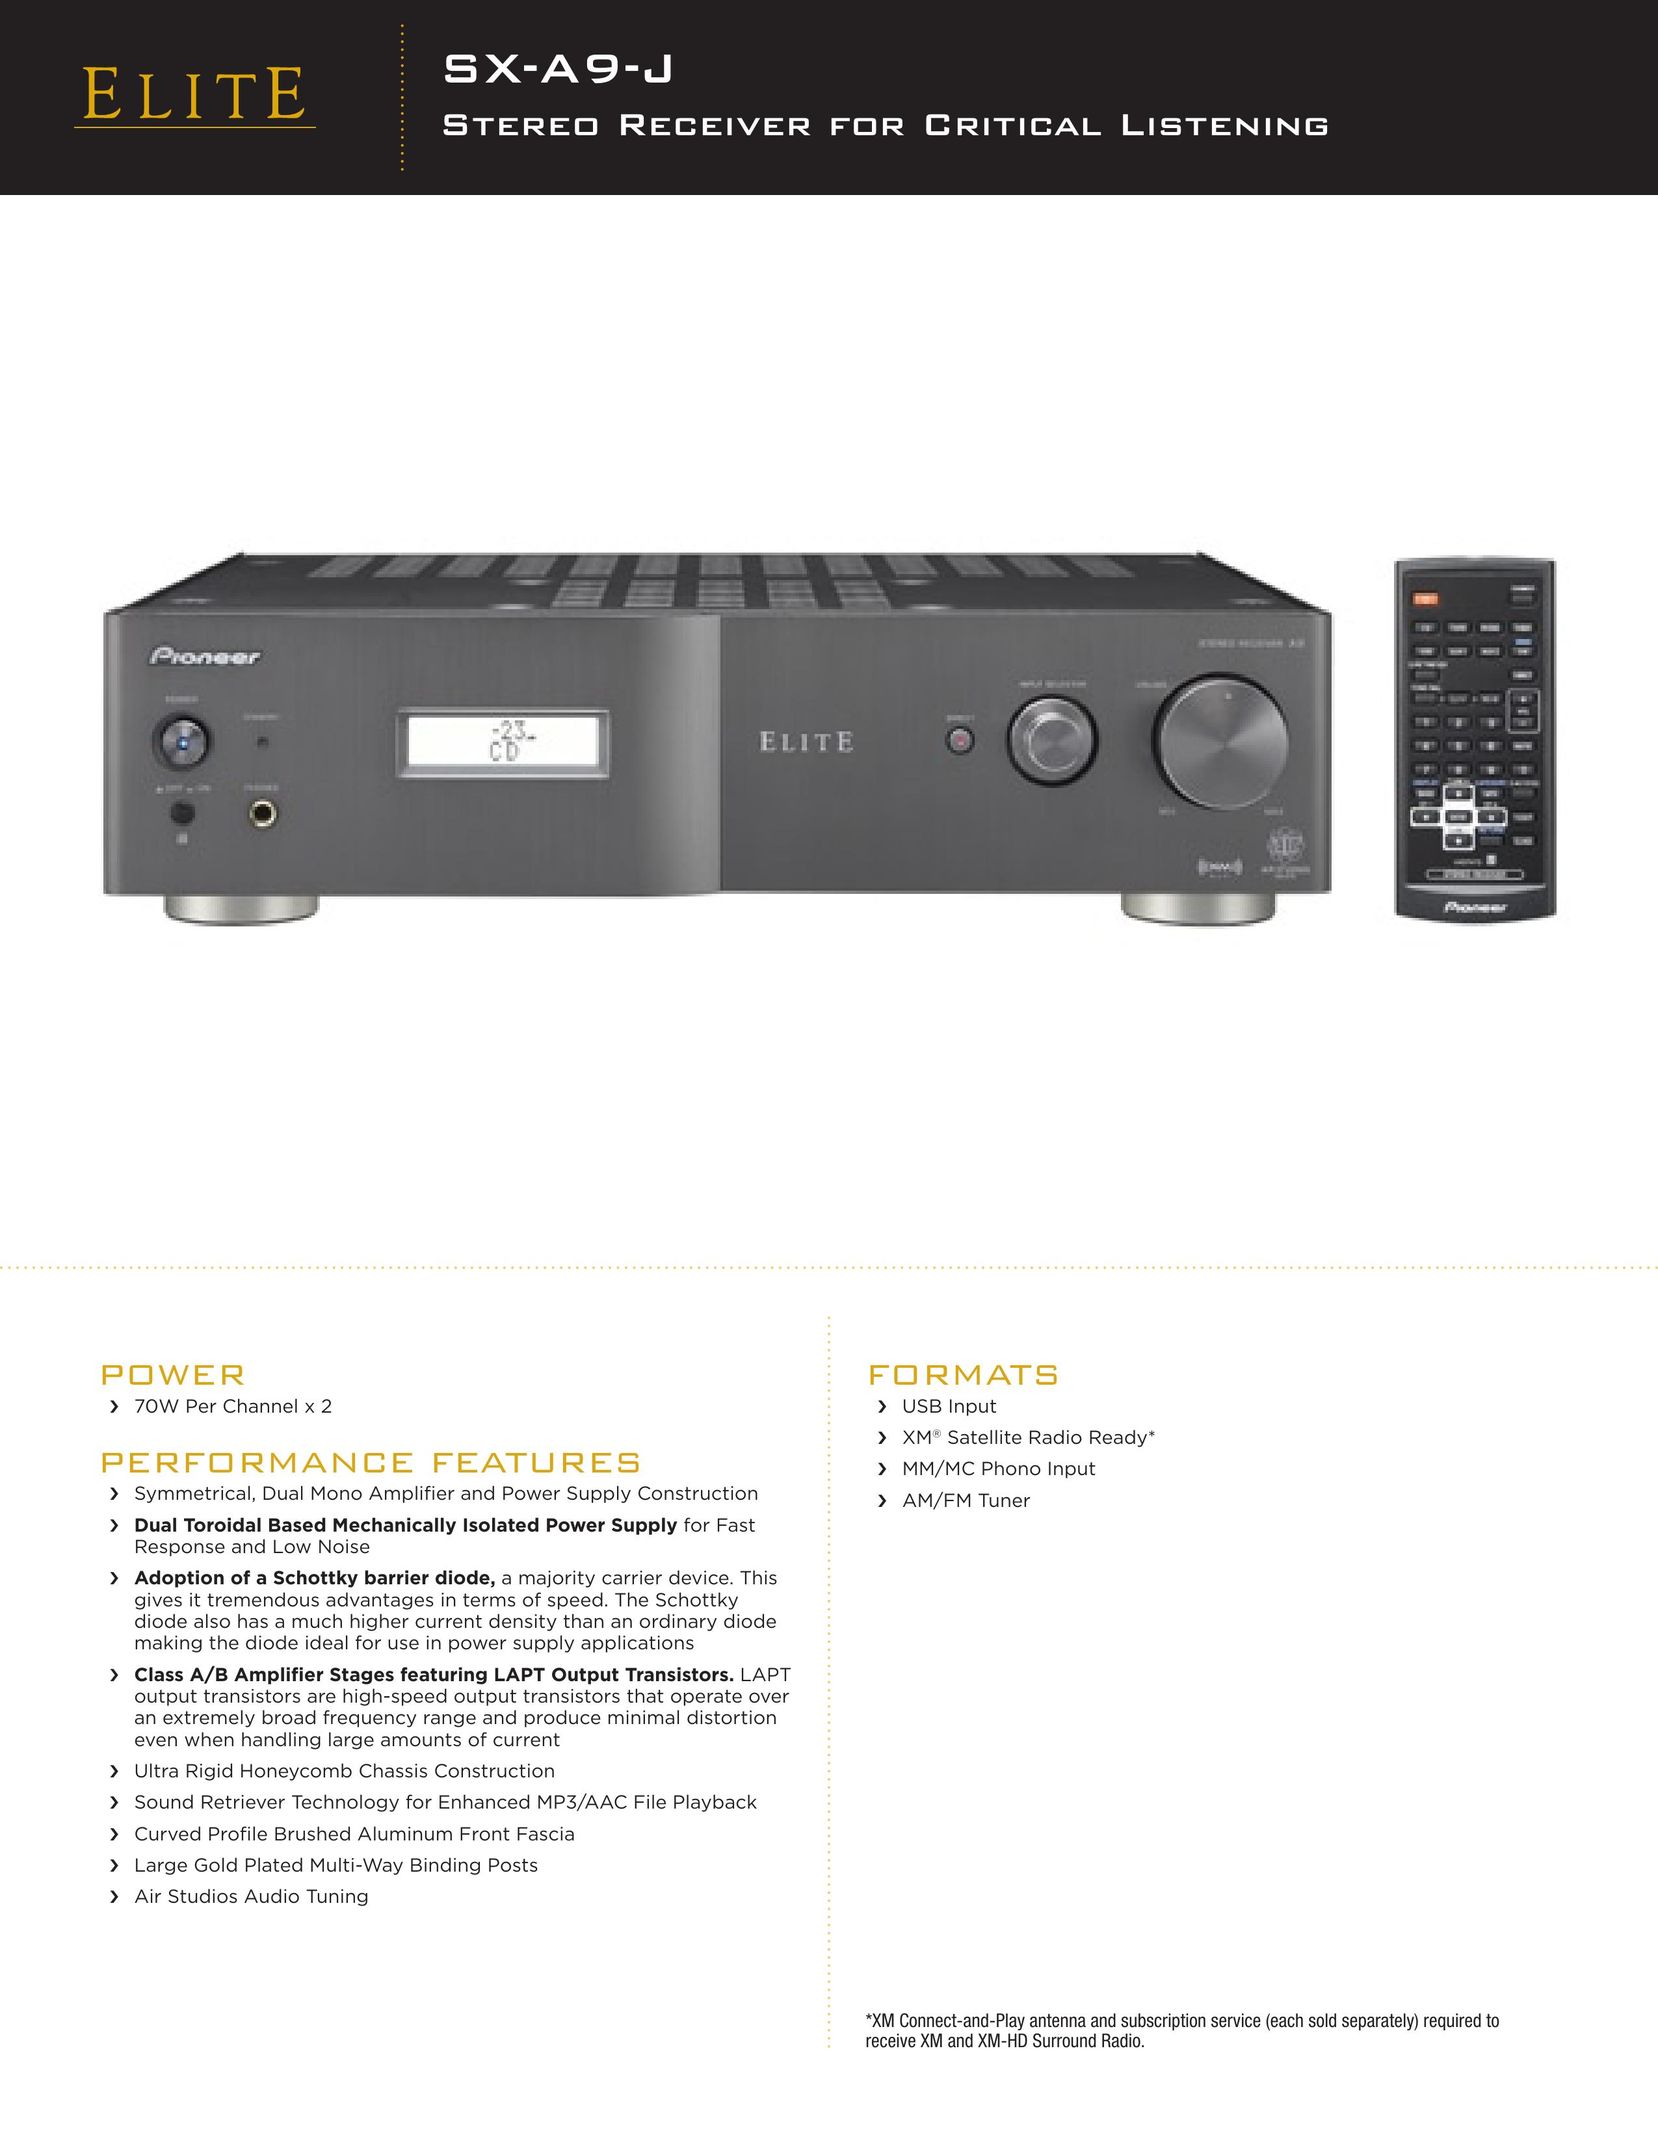 Elite SX-A9-J Stereo Receiver User Manual